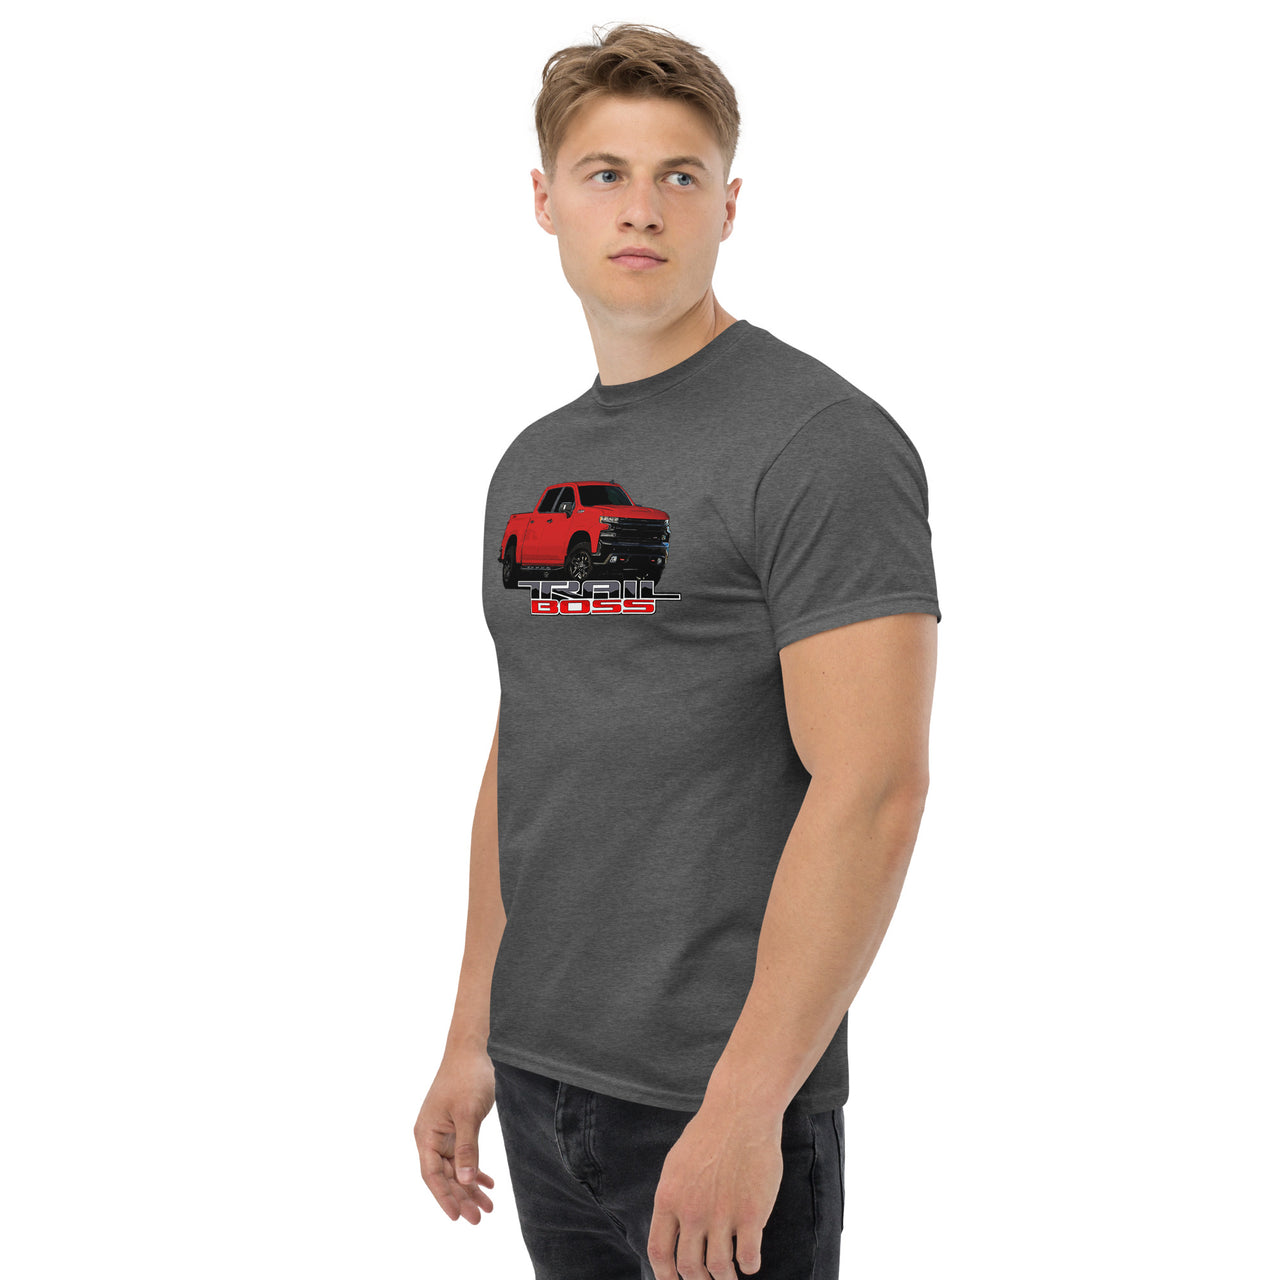 Red Trail Boss Truck T-Shirt modeled in dark heather